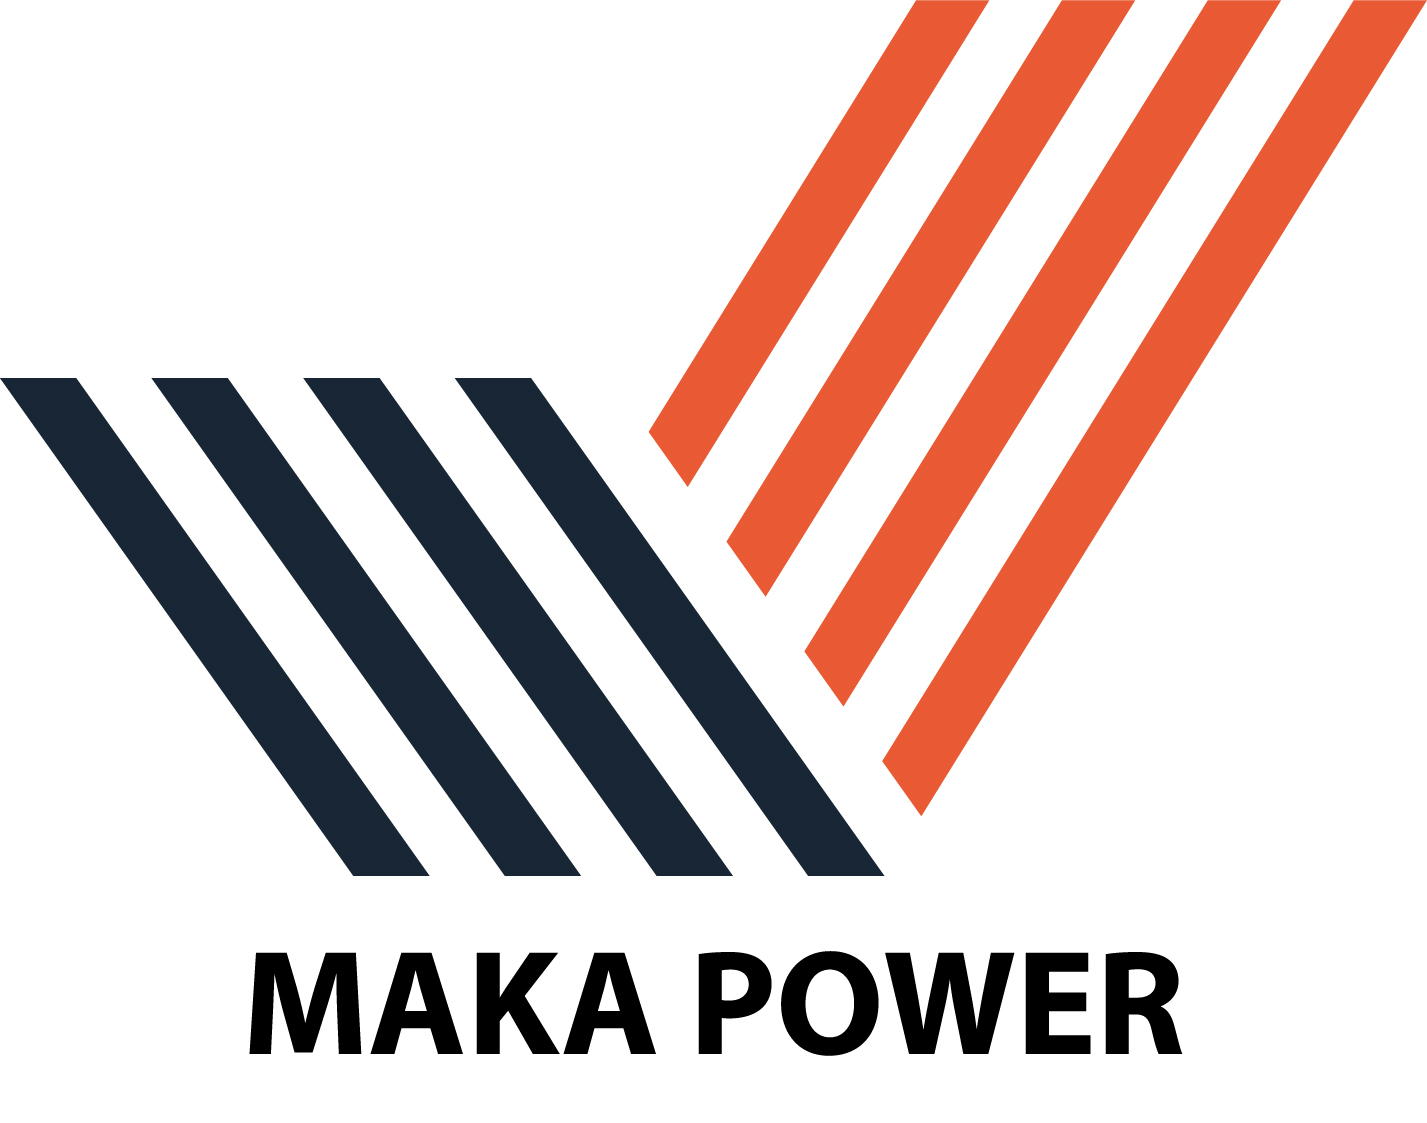 MAKA POWER